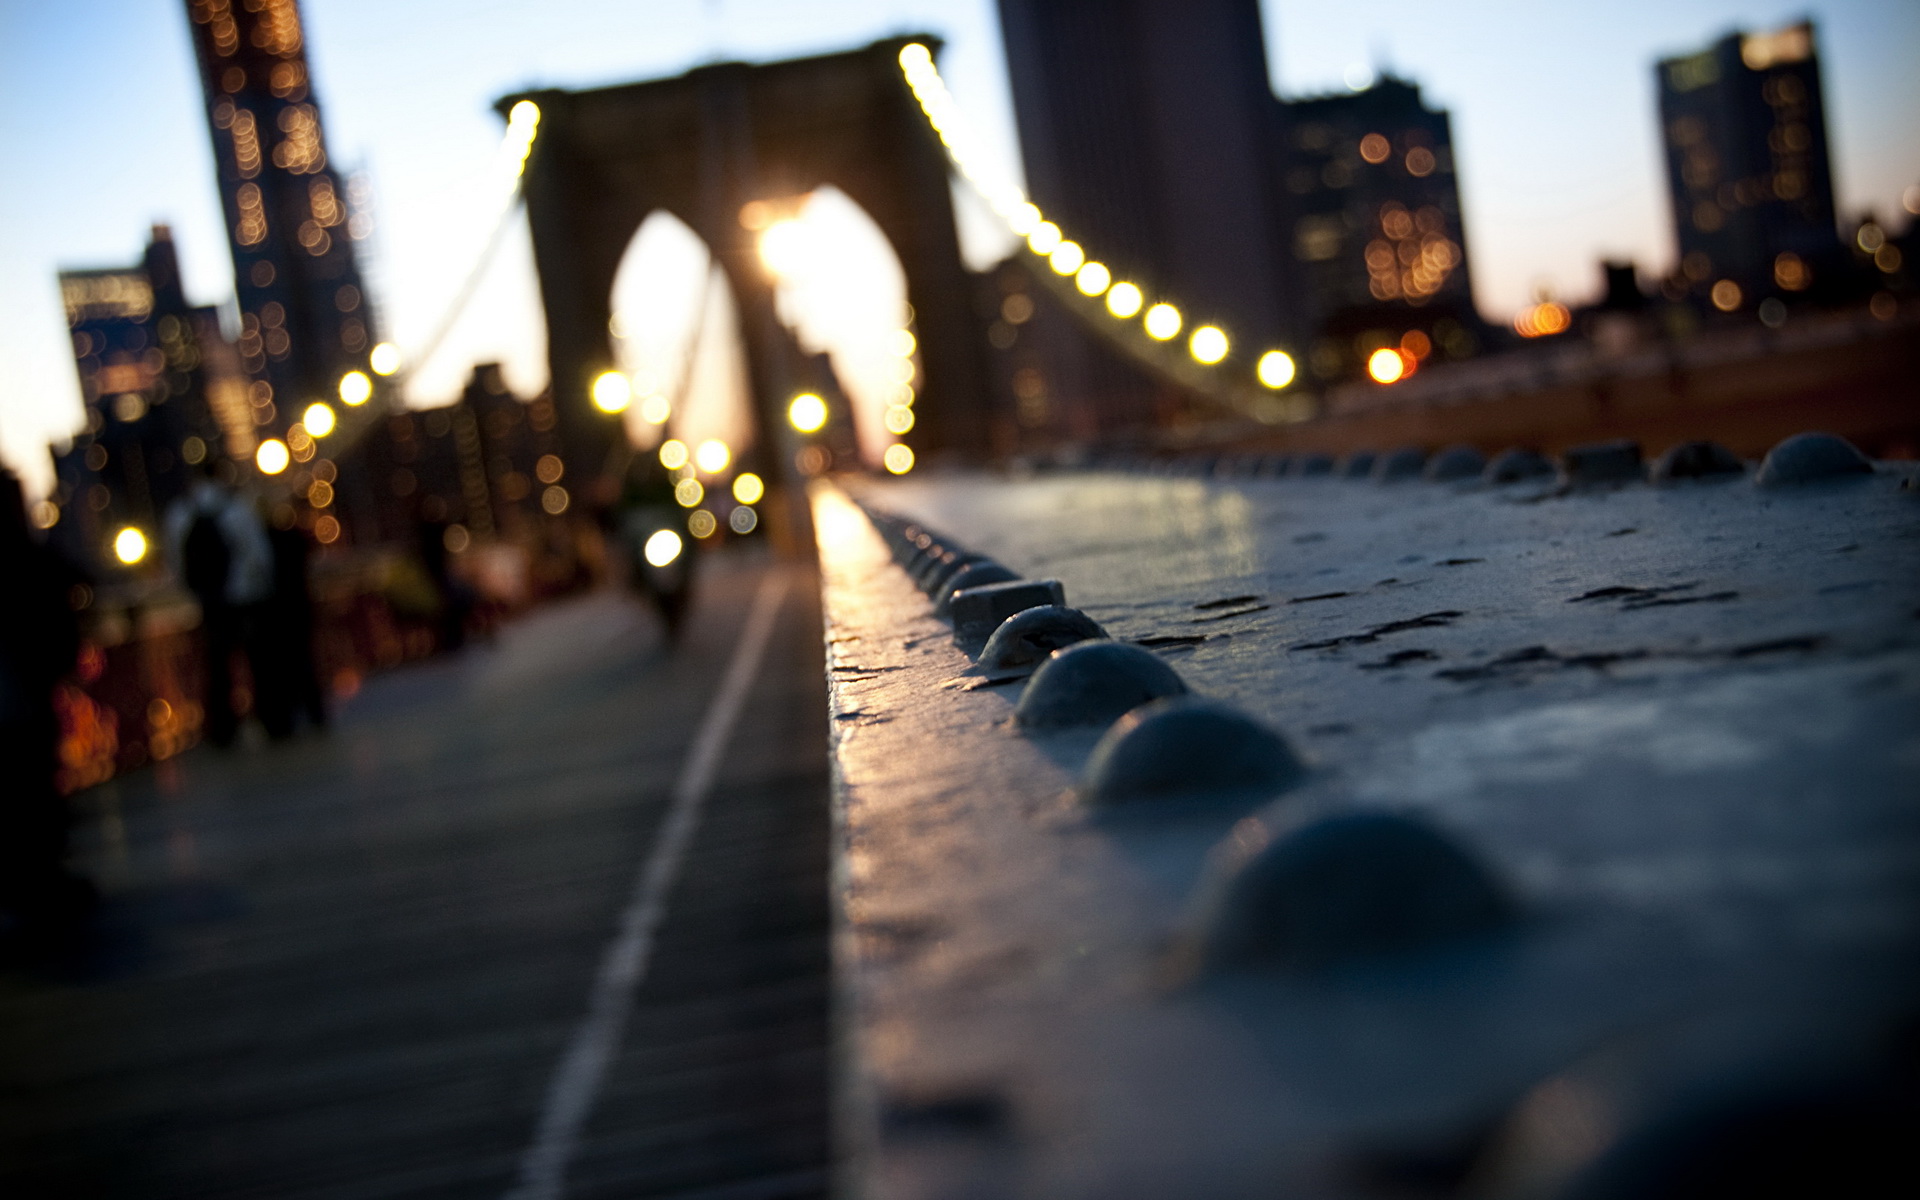 Brooklyn Bridge Puter Wallpaper Desktop Background